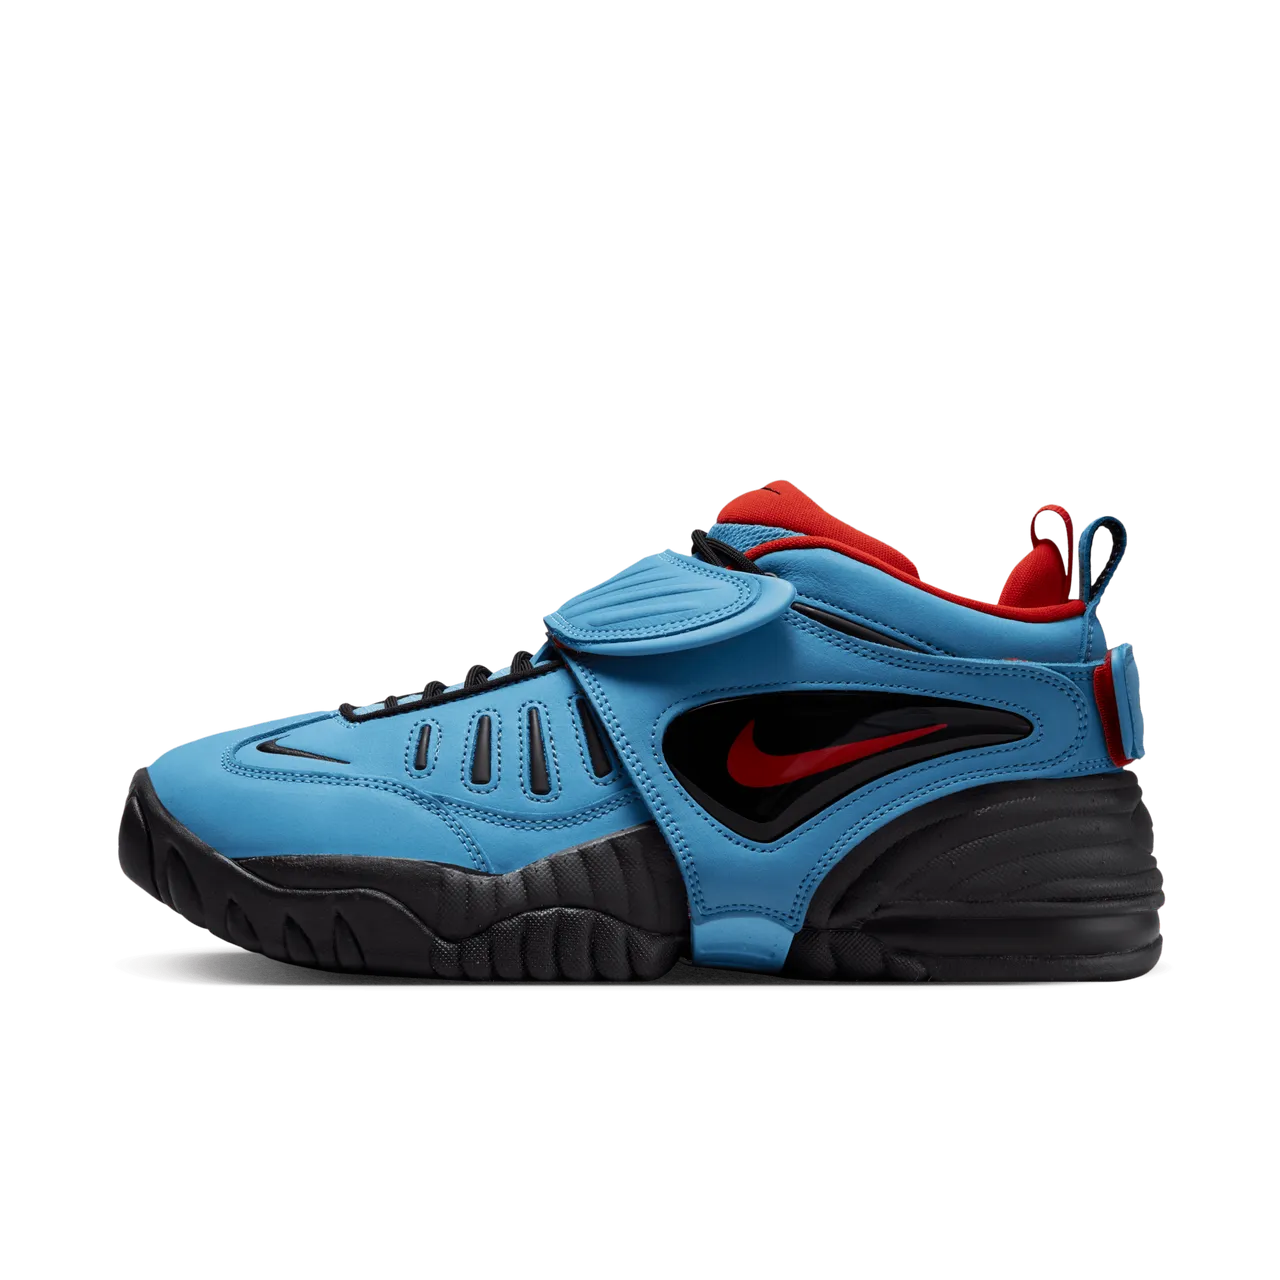 Nike x Ambush Air Adjust Force Men's Shoes - Blue - Leather